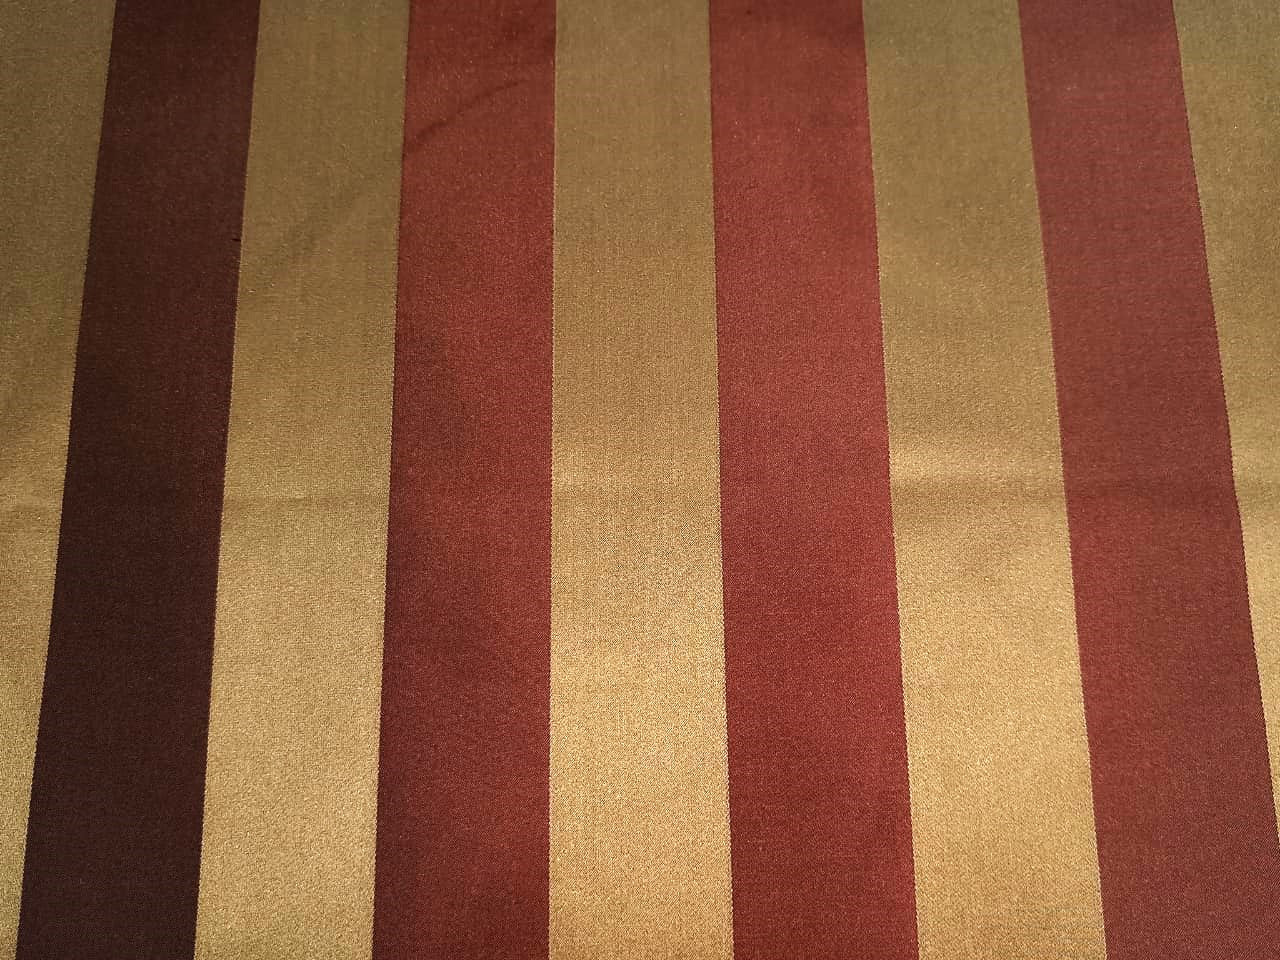 100% Silk Taffeta dusty golden red and gold colour jacquard stripe 54" wide